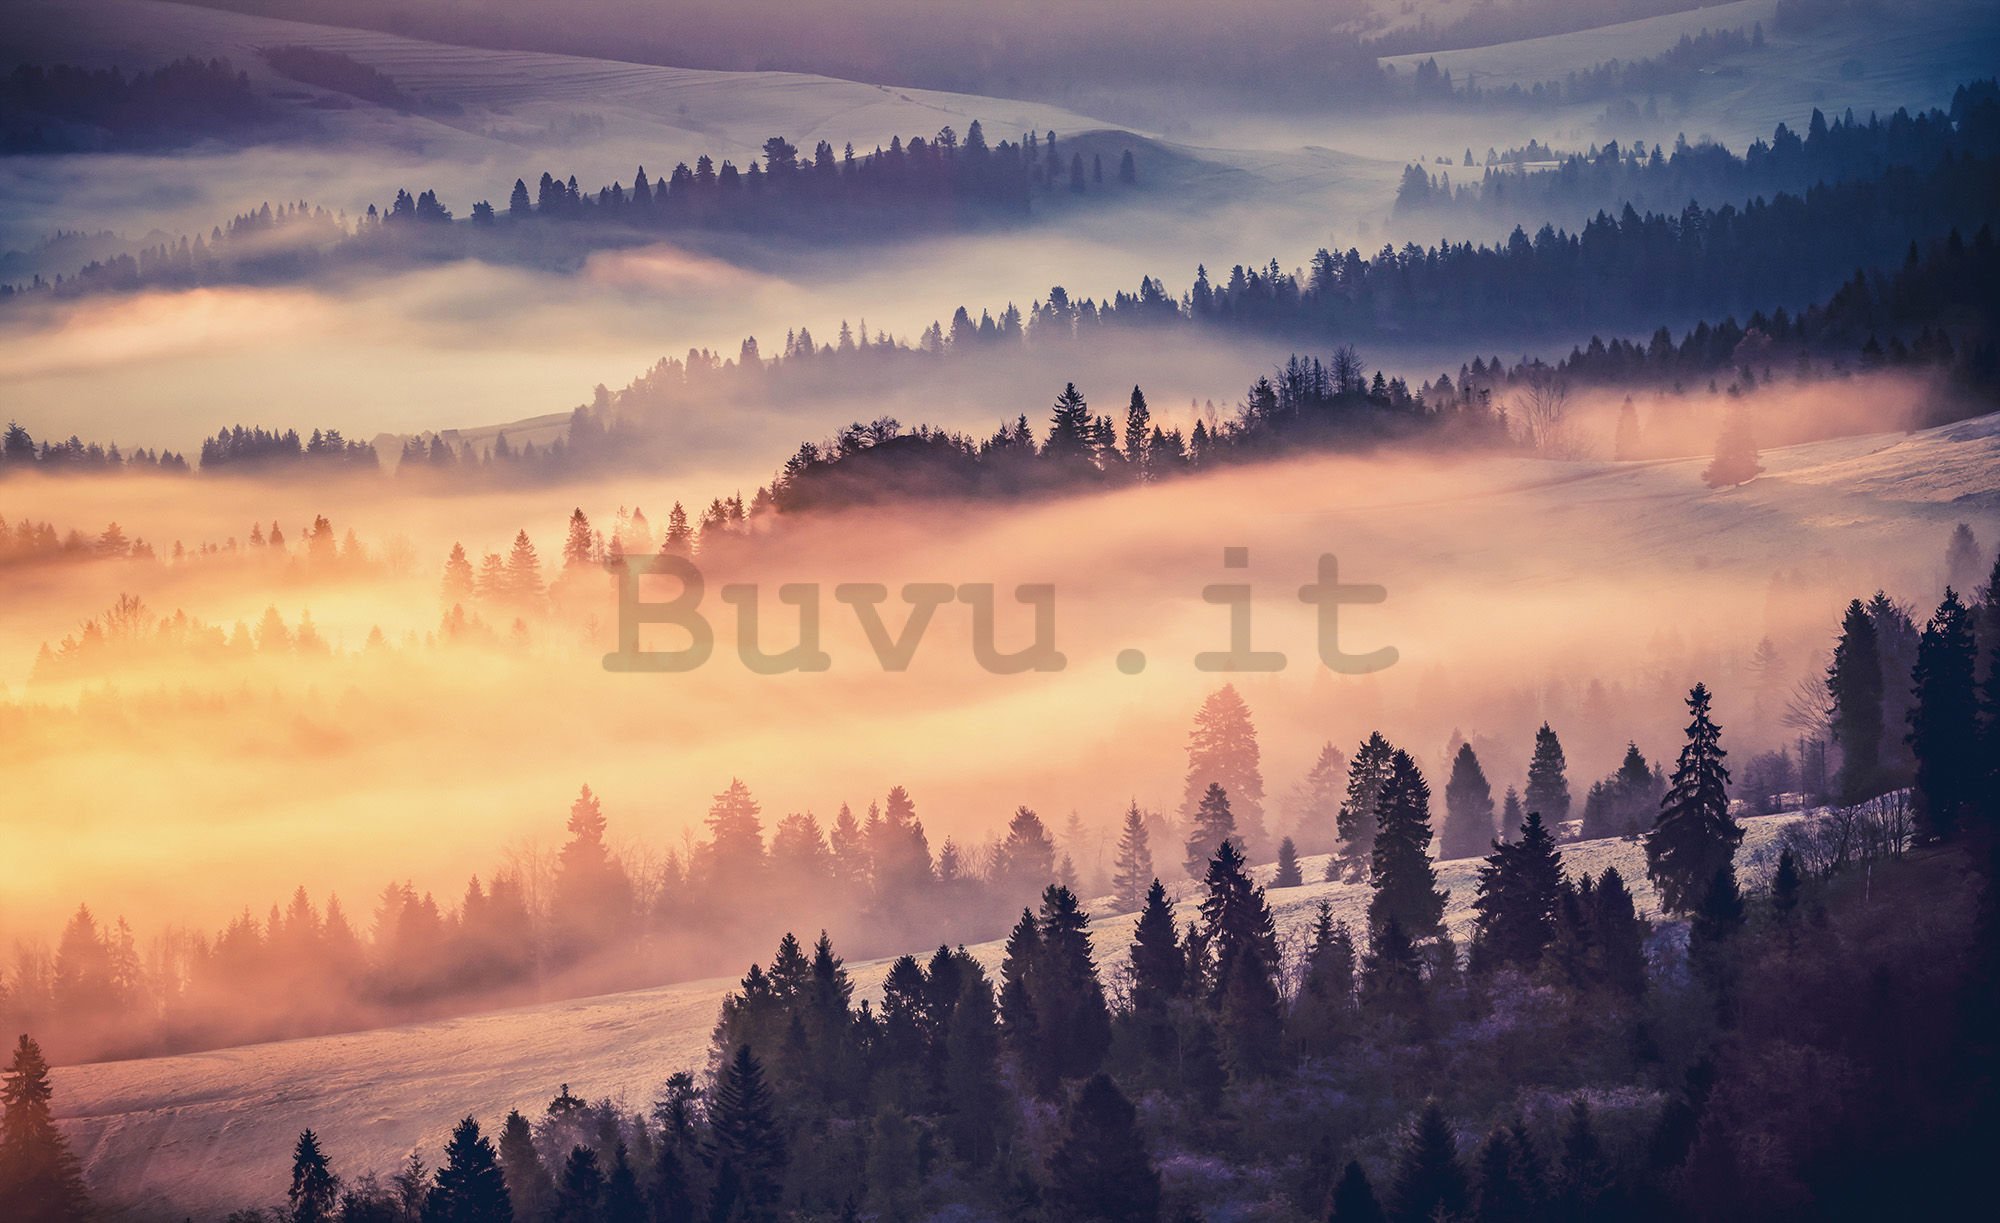 Fotomurale in TNT: Nebbia sulle montagne - 254x368 cm